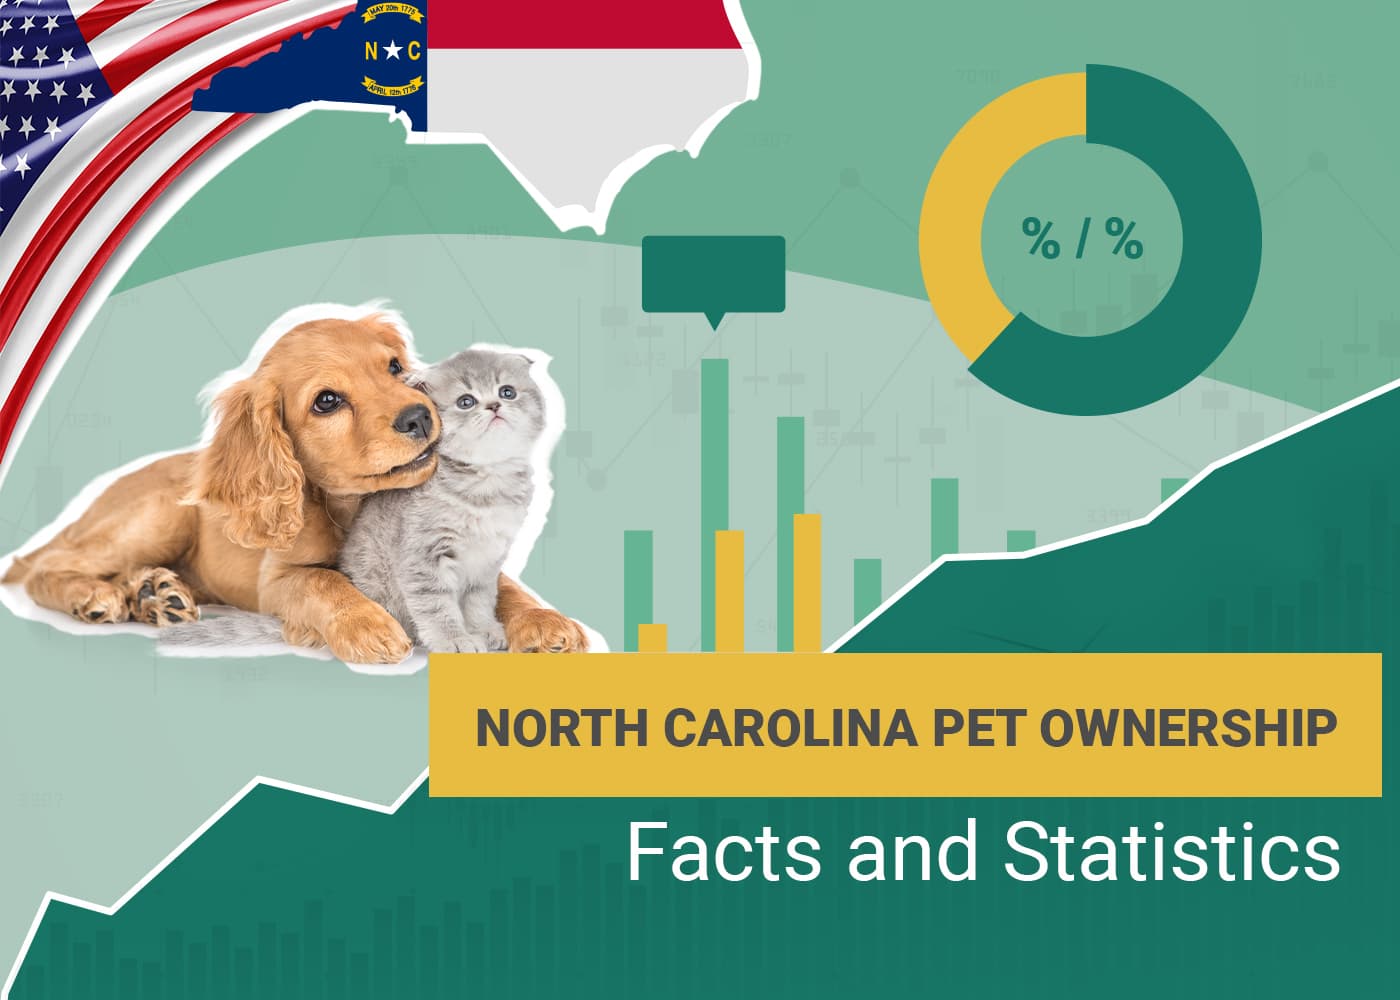 North Carolina Pet Ownership Facts and Statistics